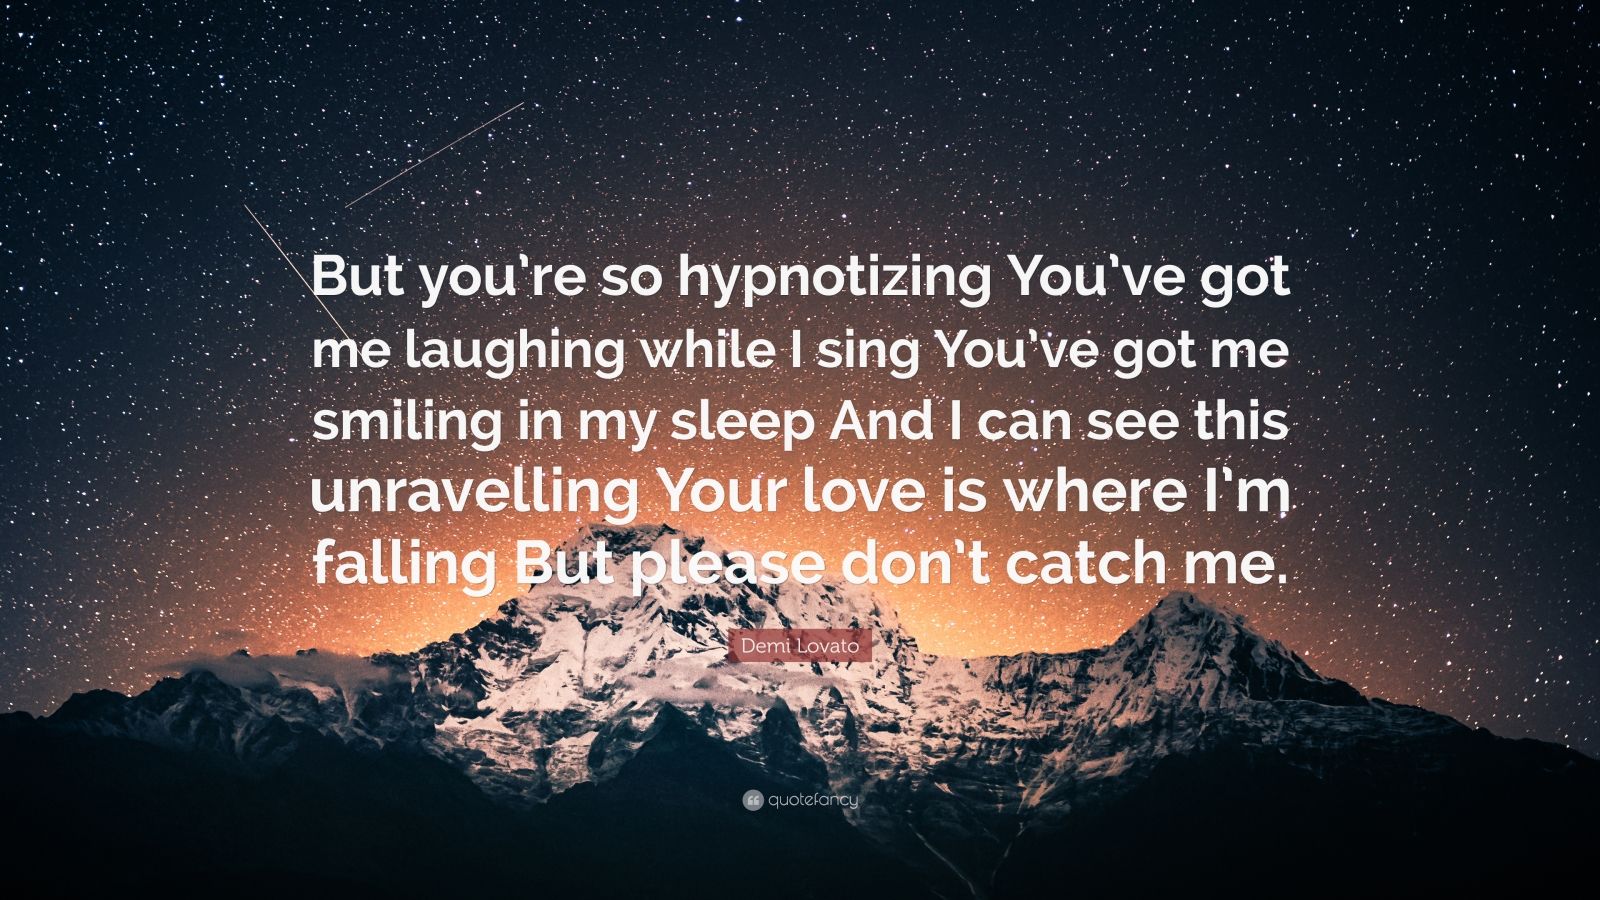 lyrics sometimes your words just hypnotize me